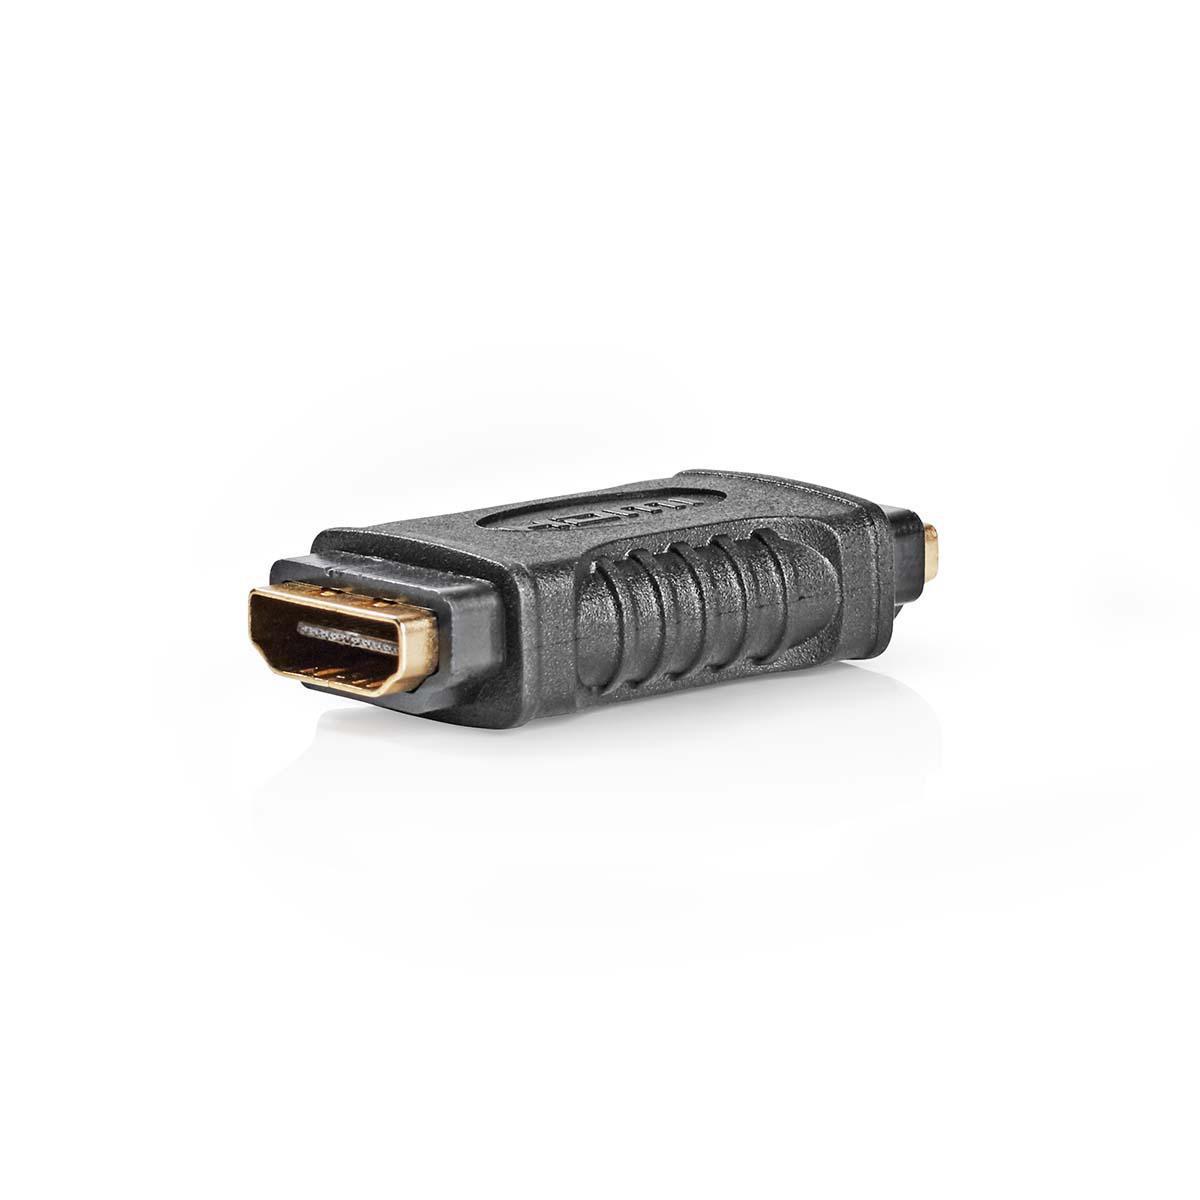 NEDIS HDMI™ CVGP34900BK -Adapter